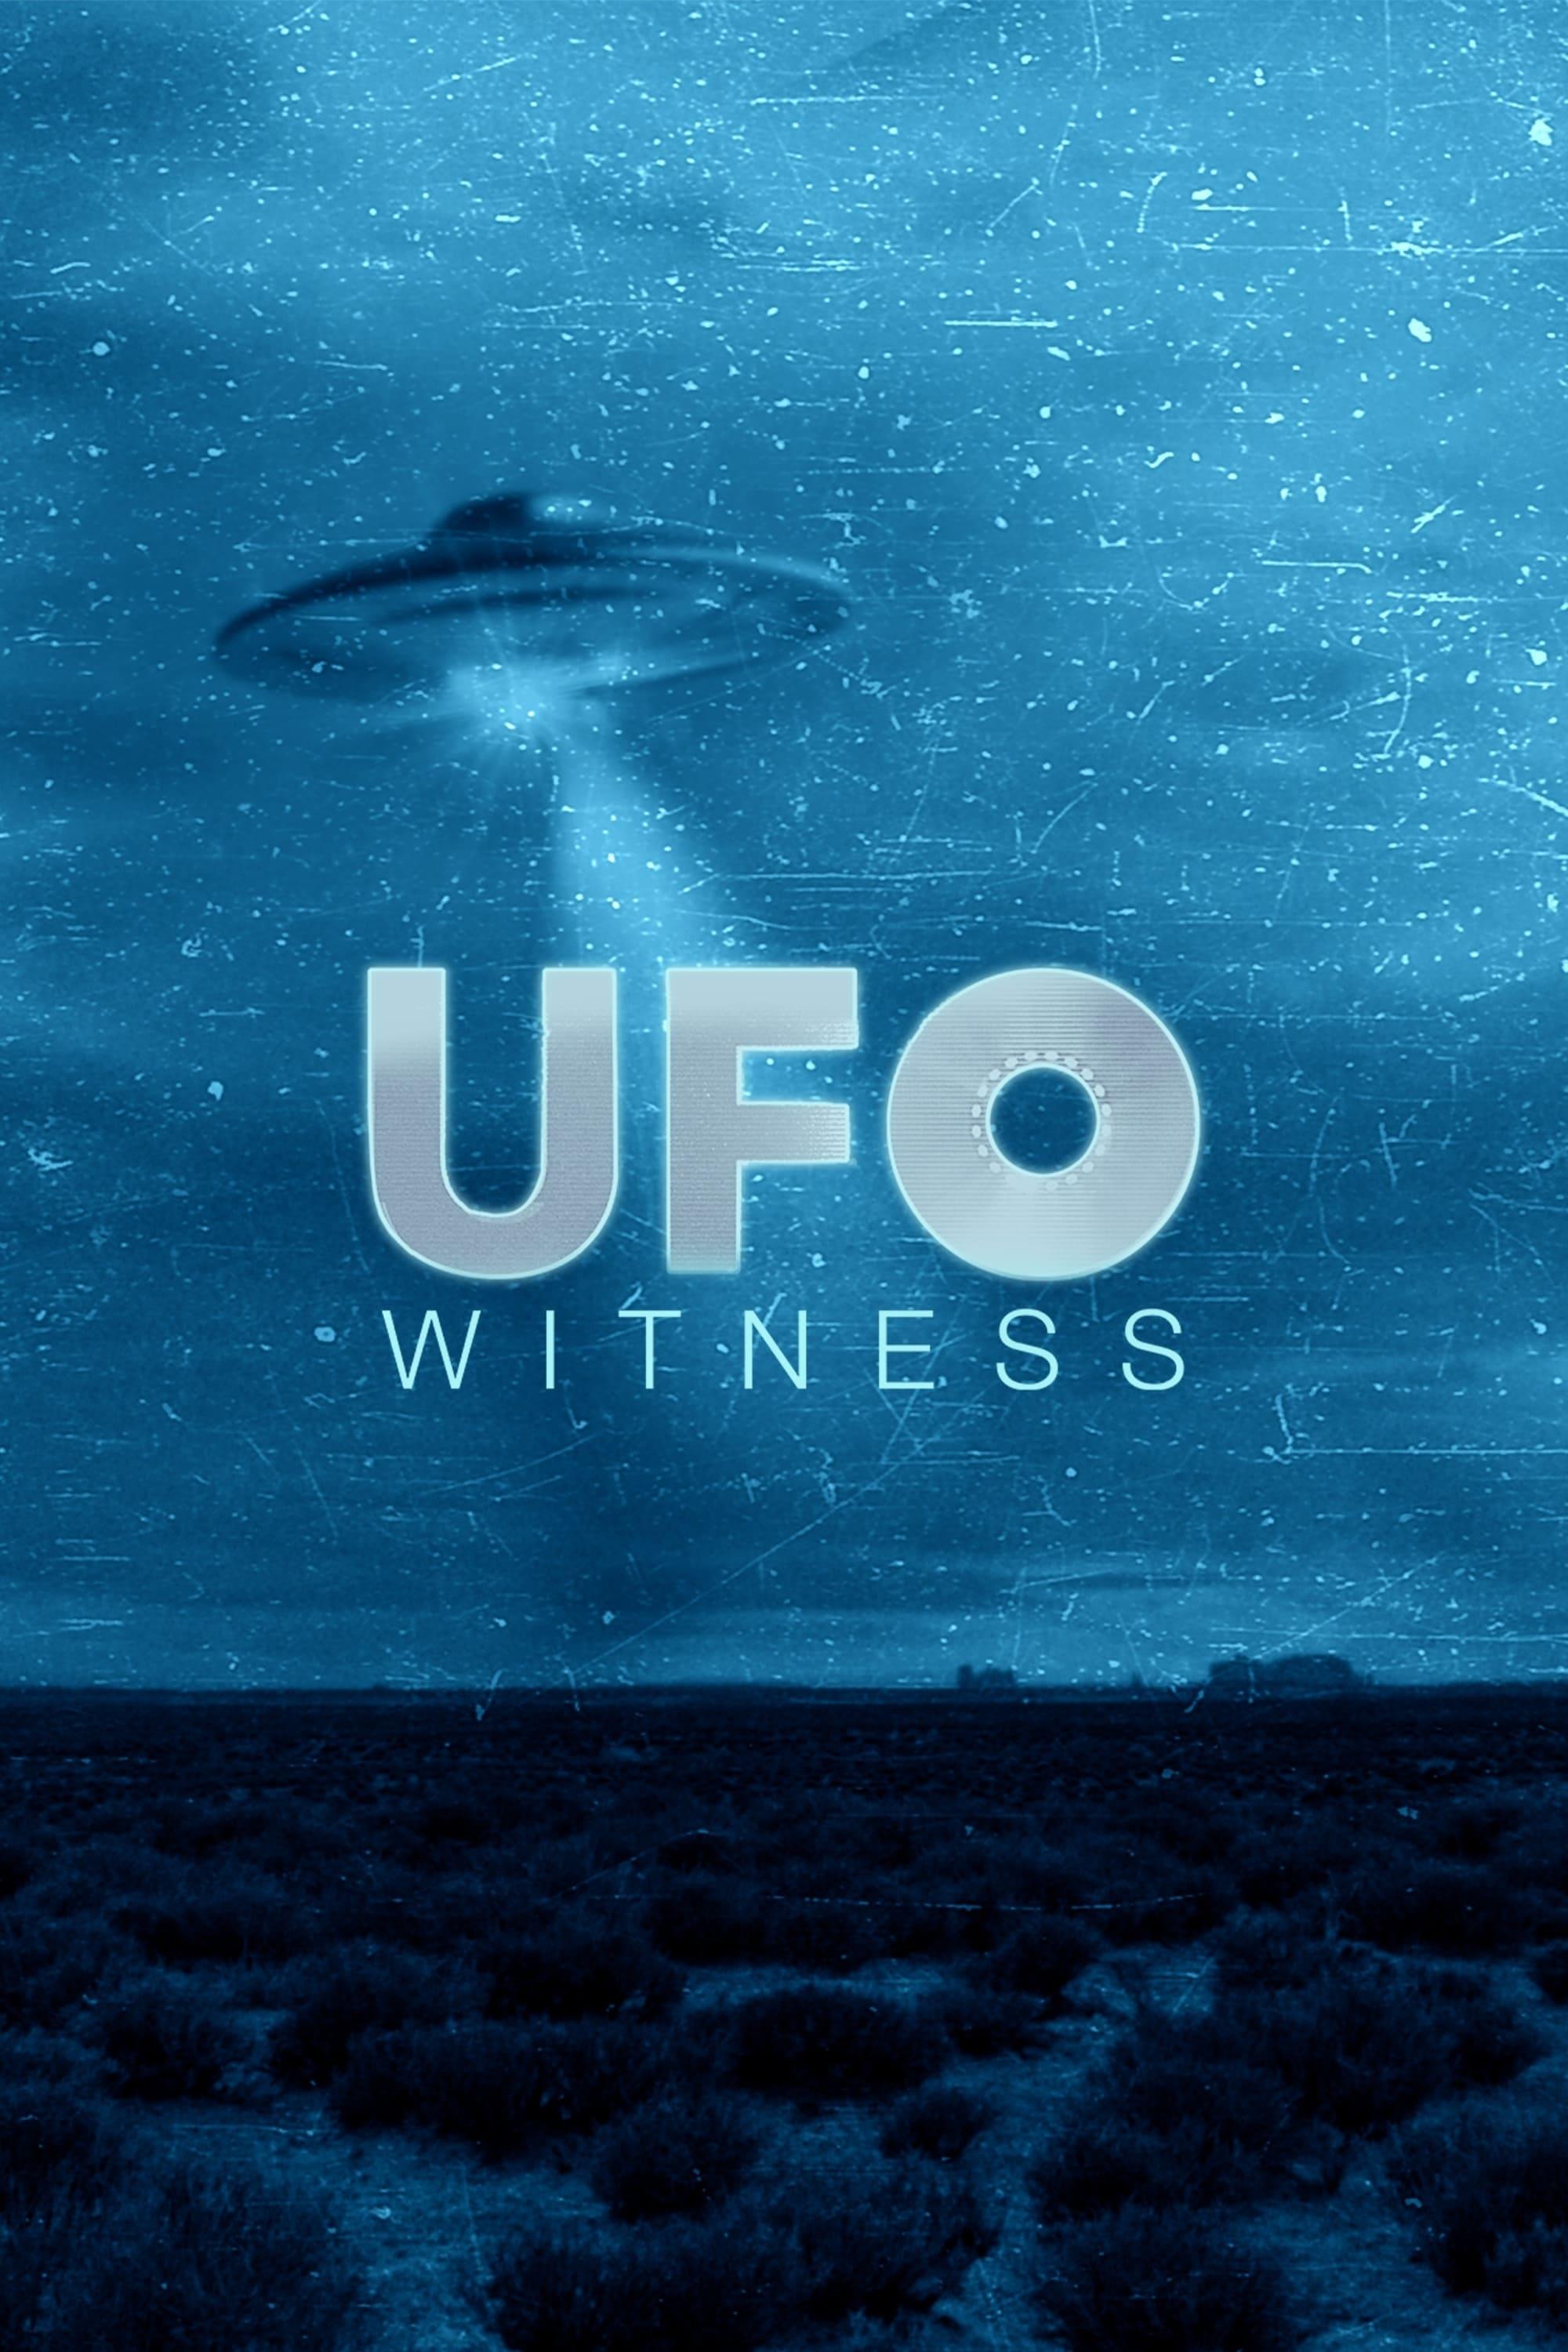 UFO Witness poster